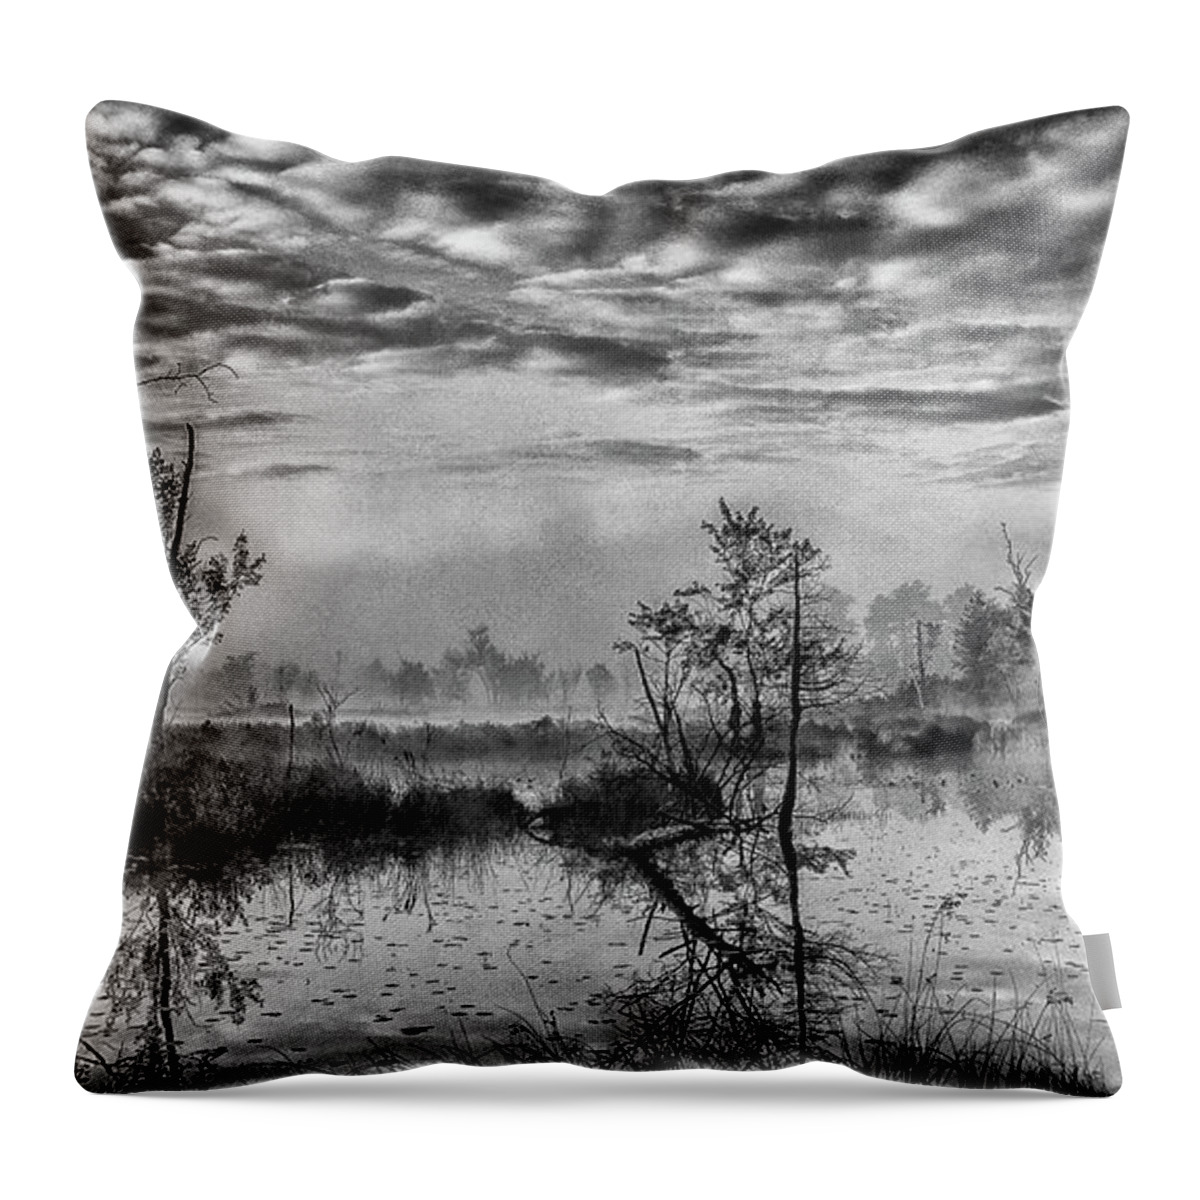 Landscape Throw Pillow featuring the photograph Fine Art Jersey pines landscape by Louis Dallara